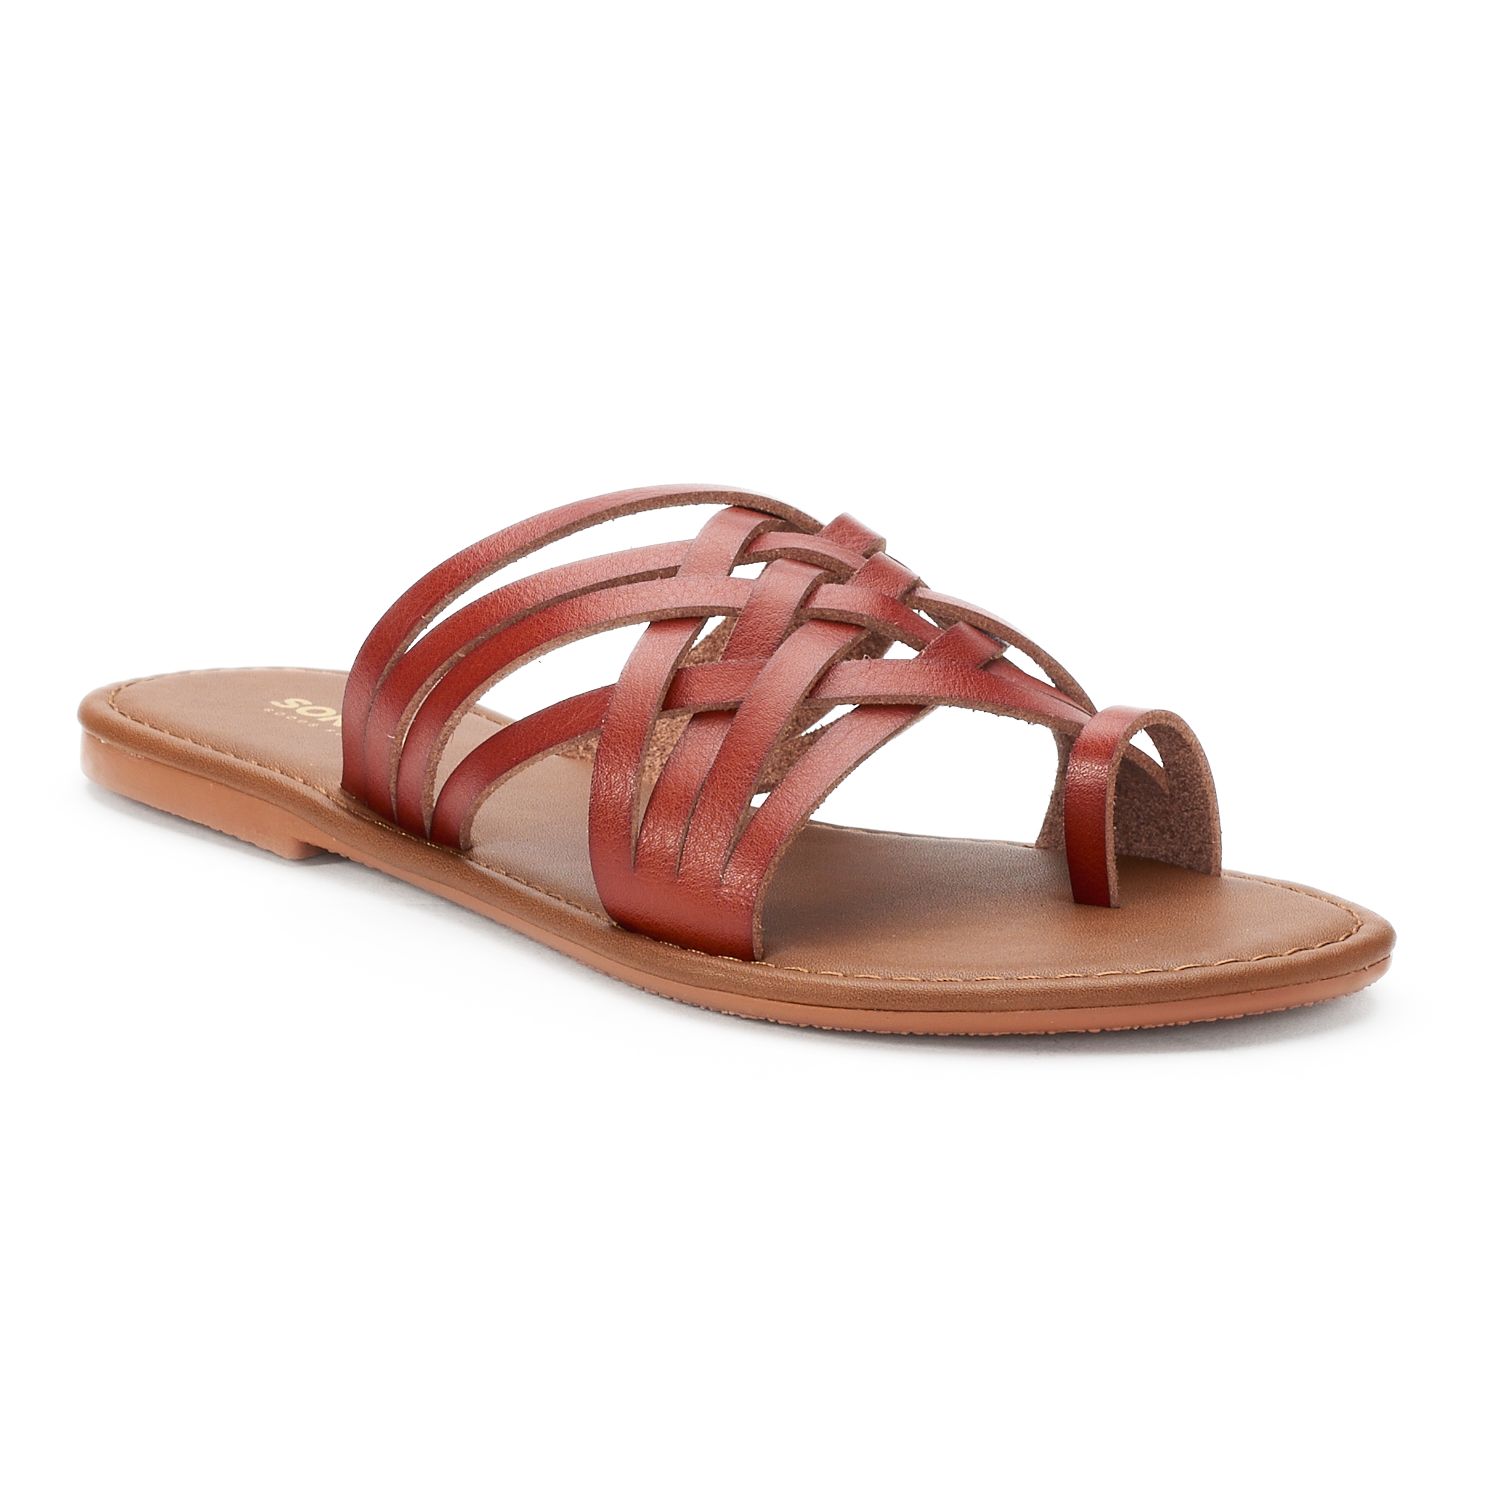 Toe Loop Huarache Sandals